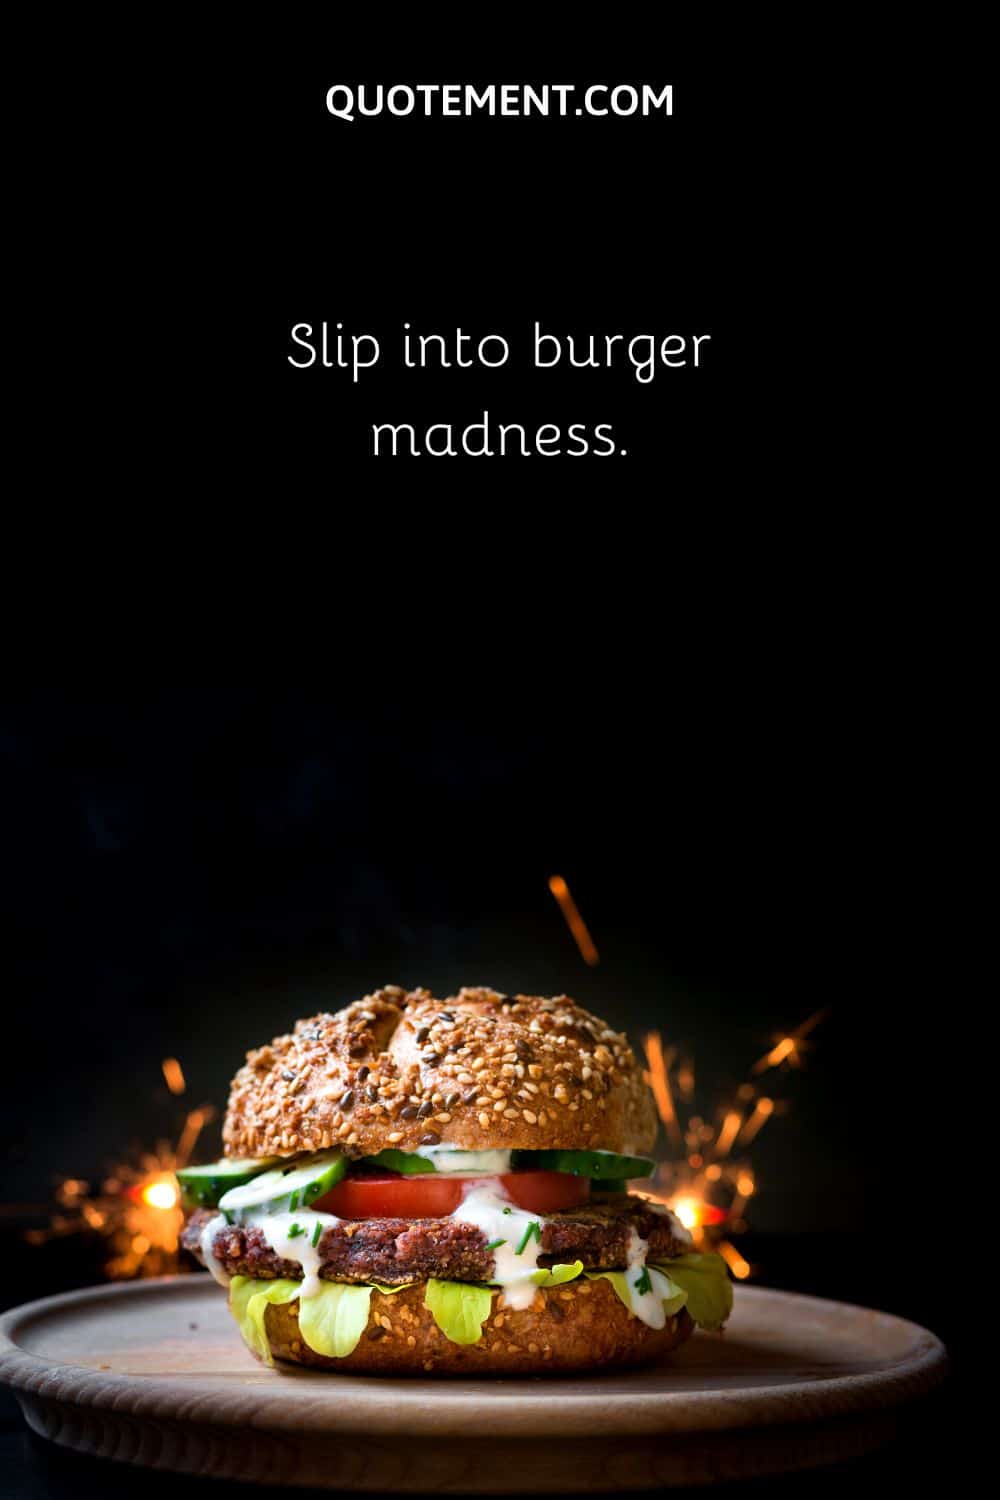 Slip into burger madness.